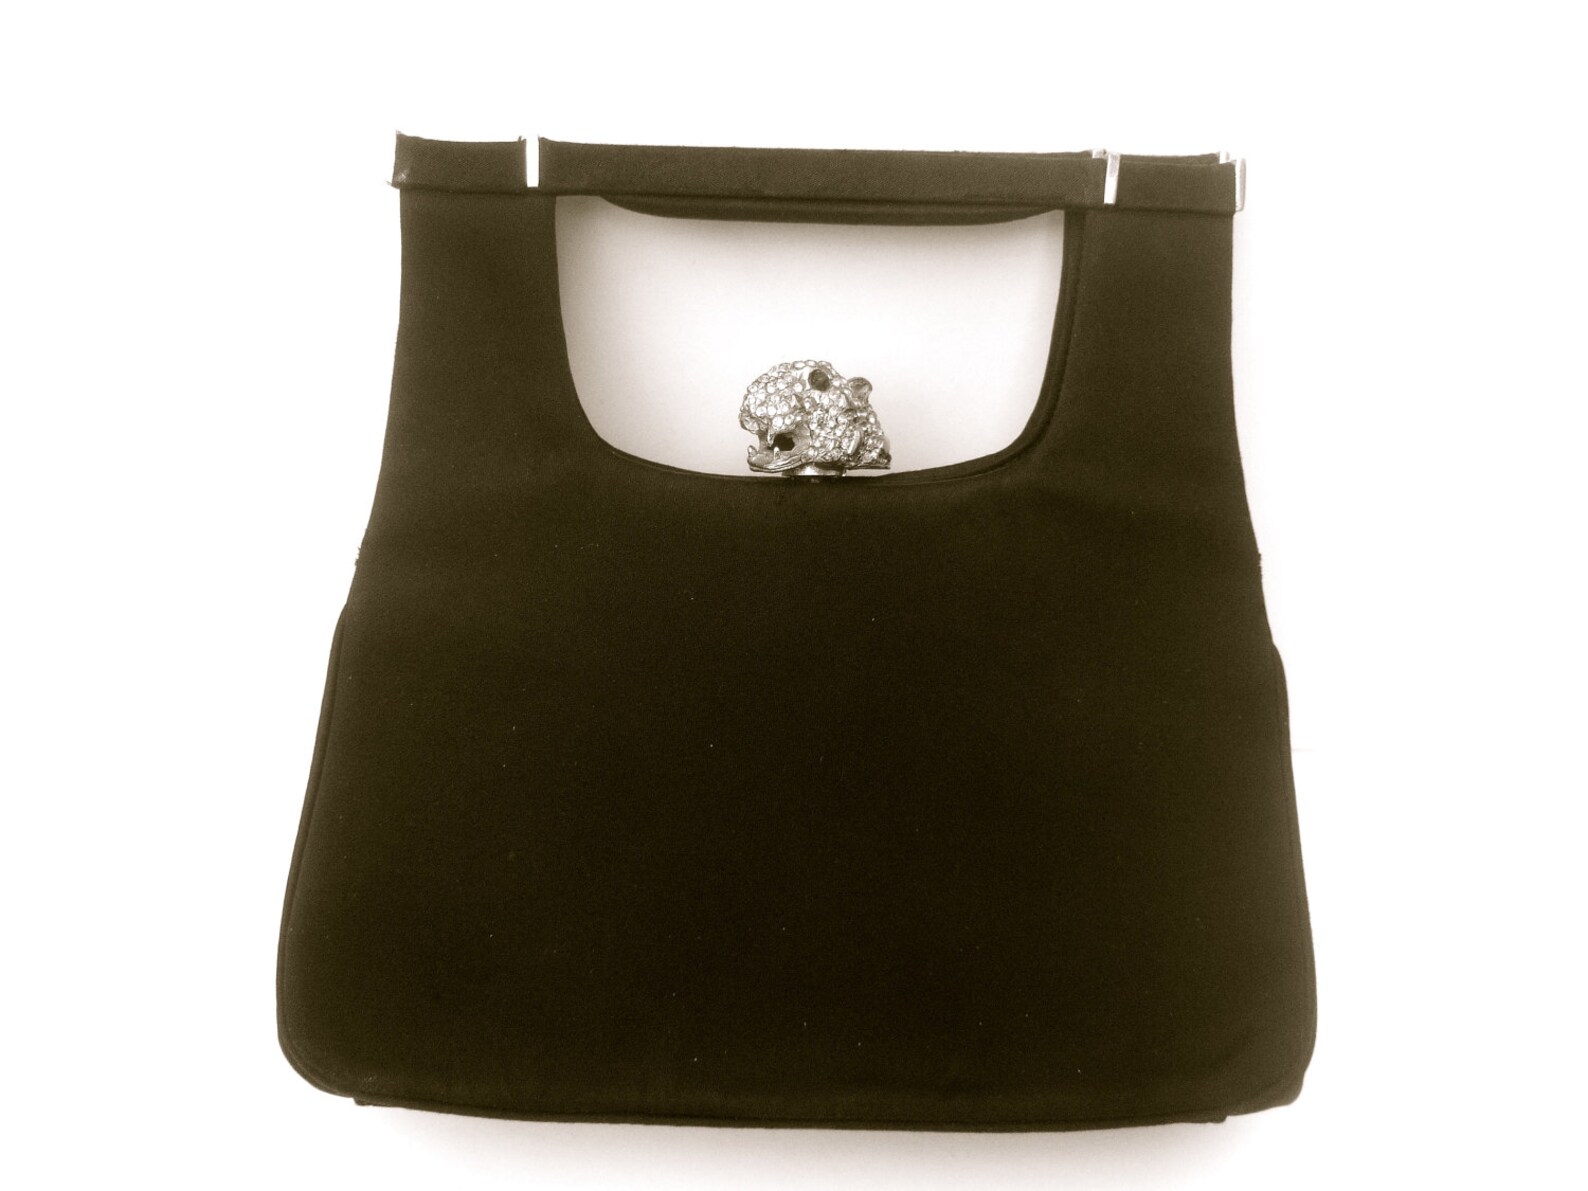 Exquisite Ken Lane Black Satin Panther Clasp Evening Bag for - Etsy